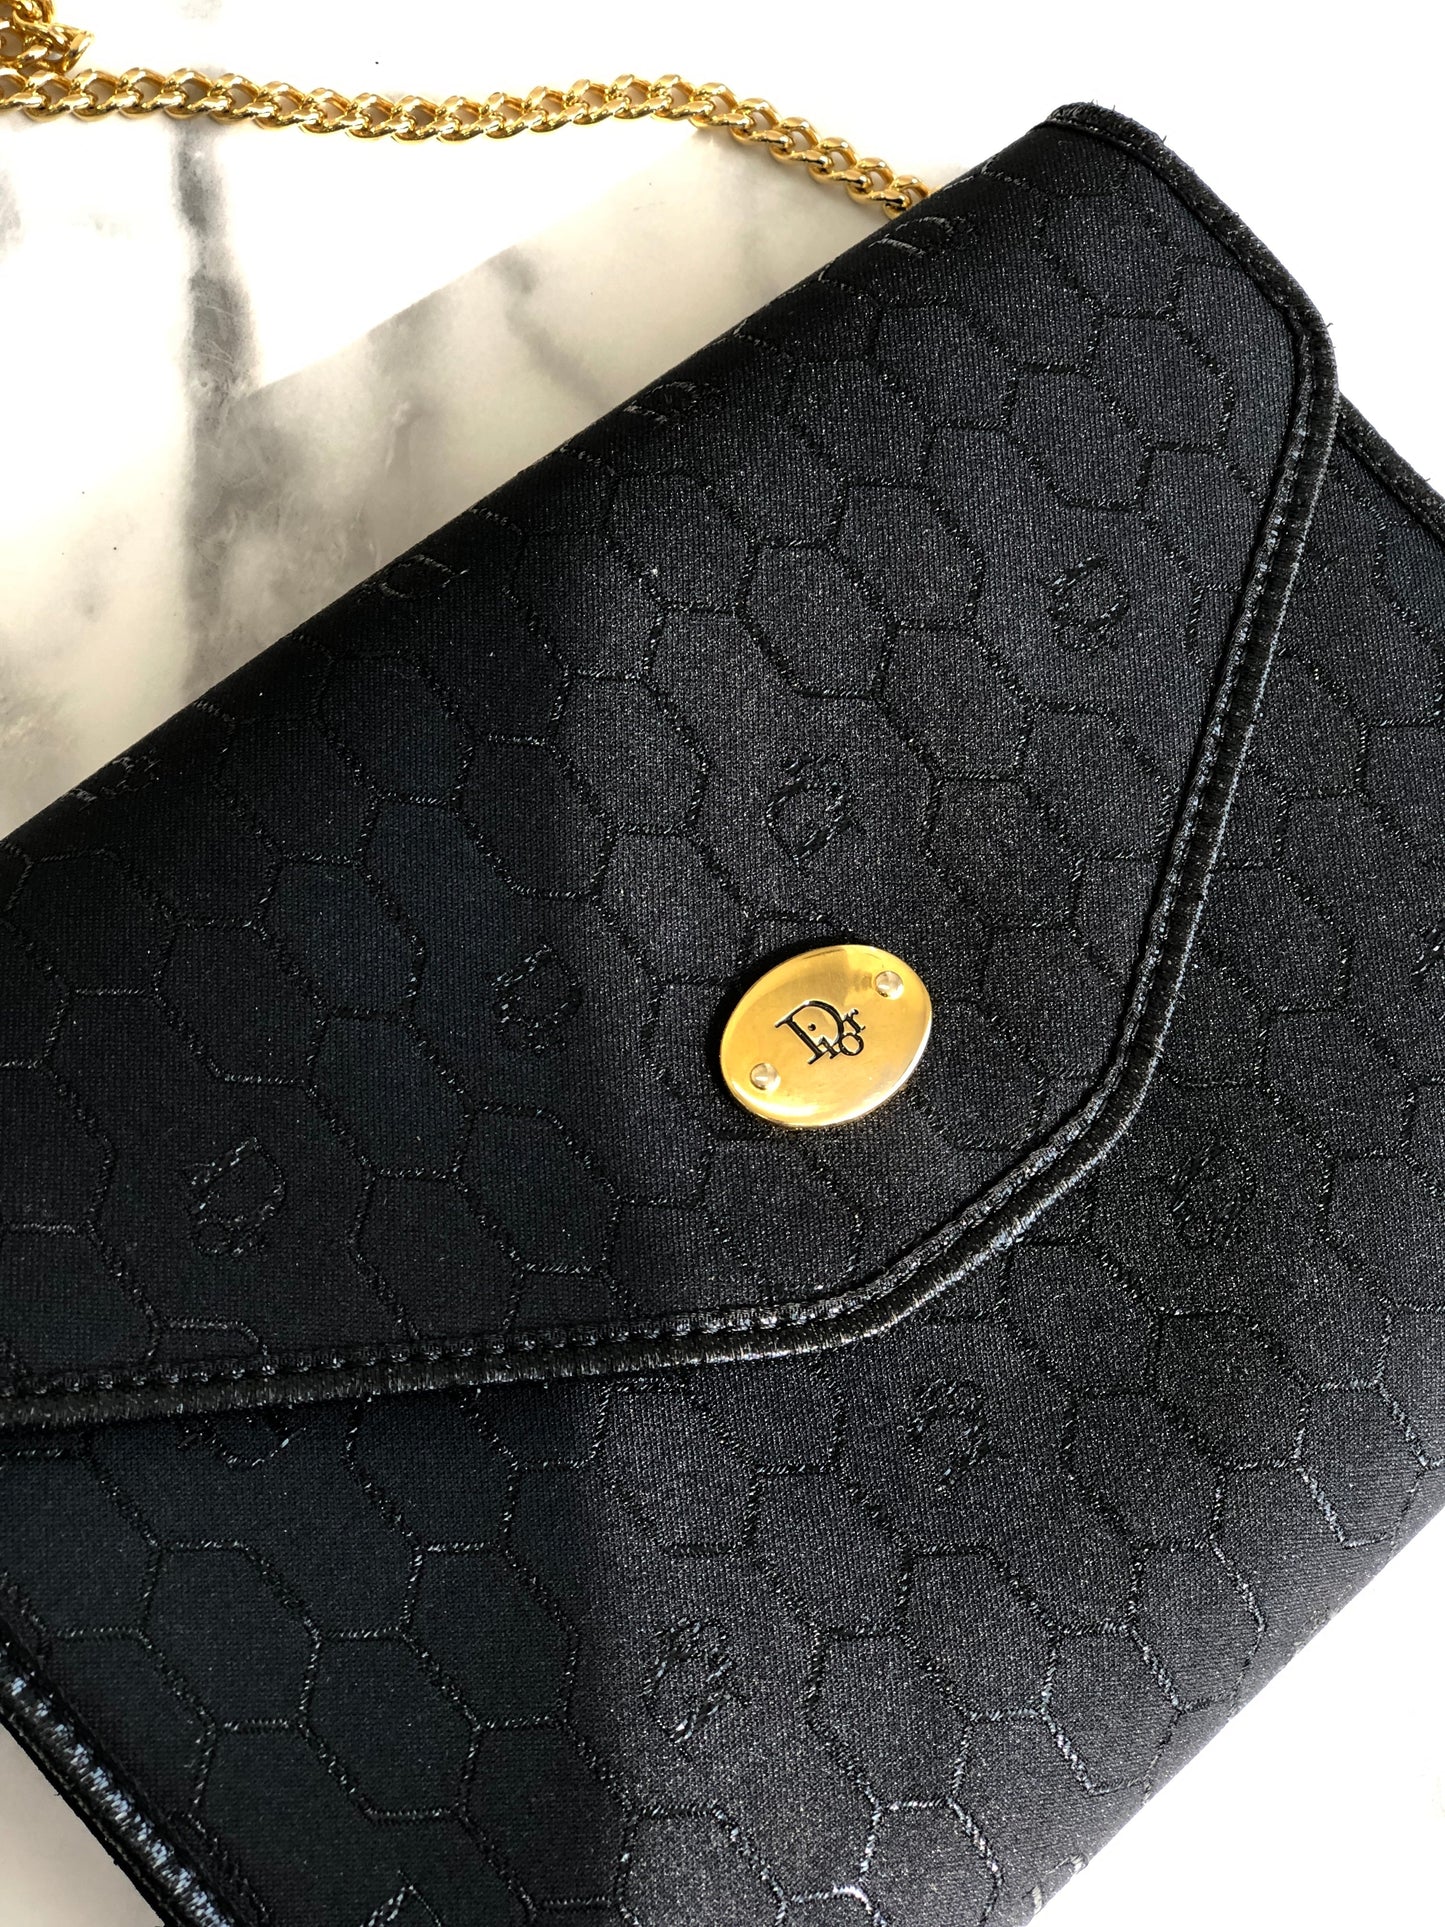 Christian Dior Logo Honeycomb Pattern Jacquard Chain Crossbody Shoulderbag Black Vintage Old dpesed